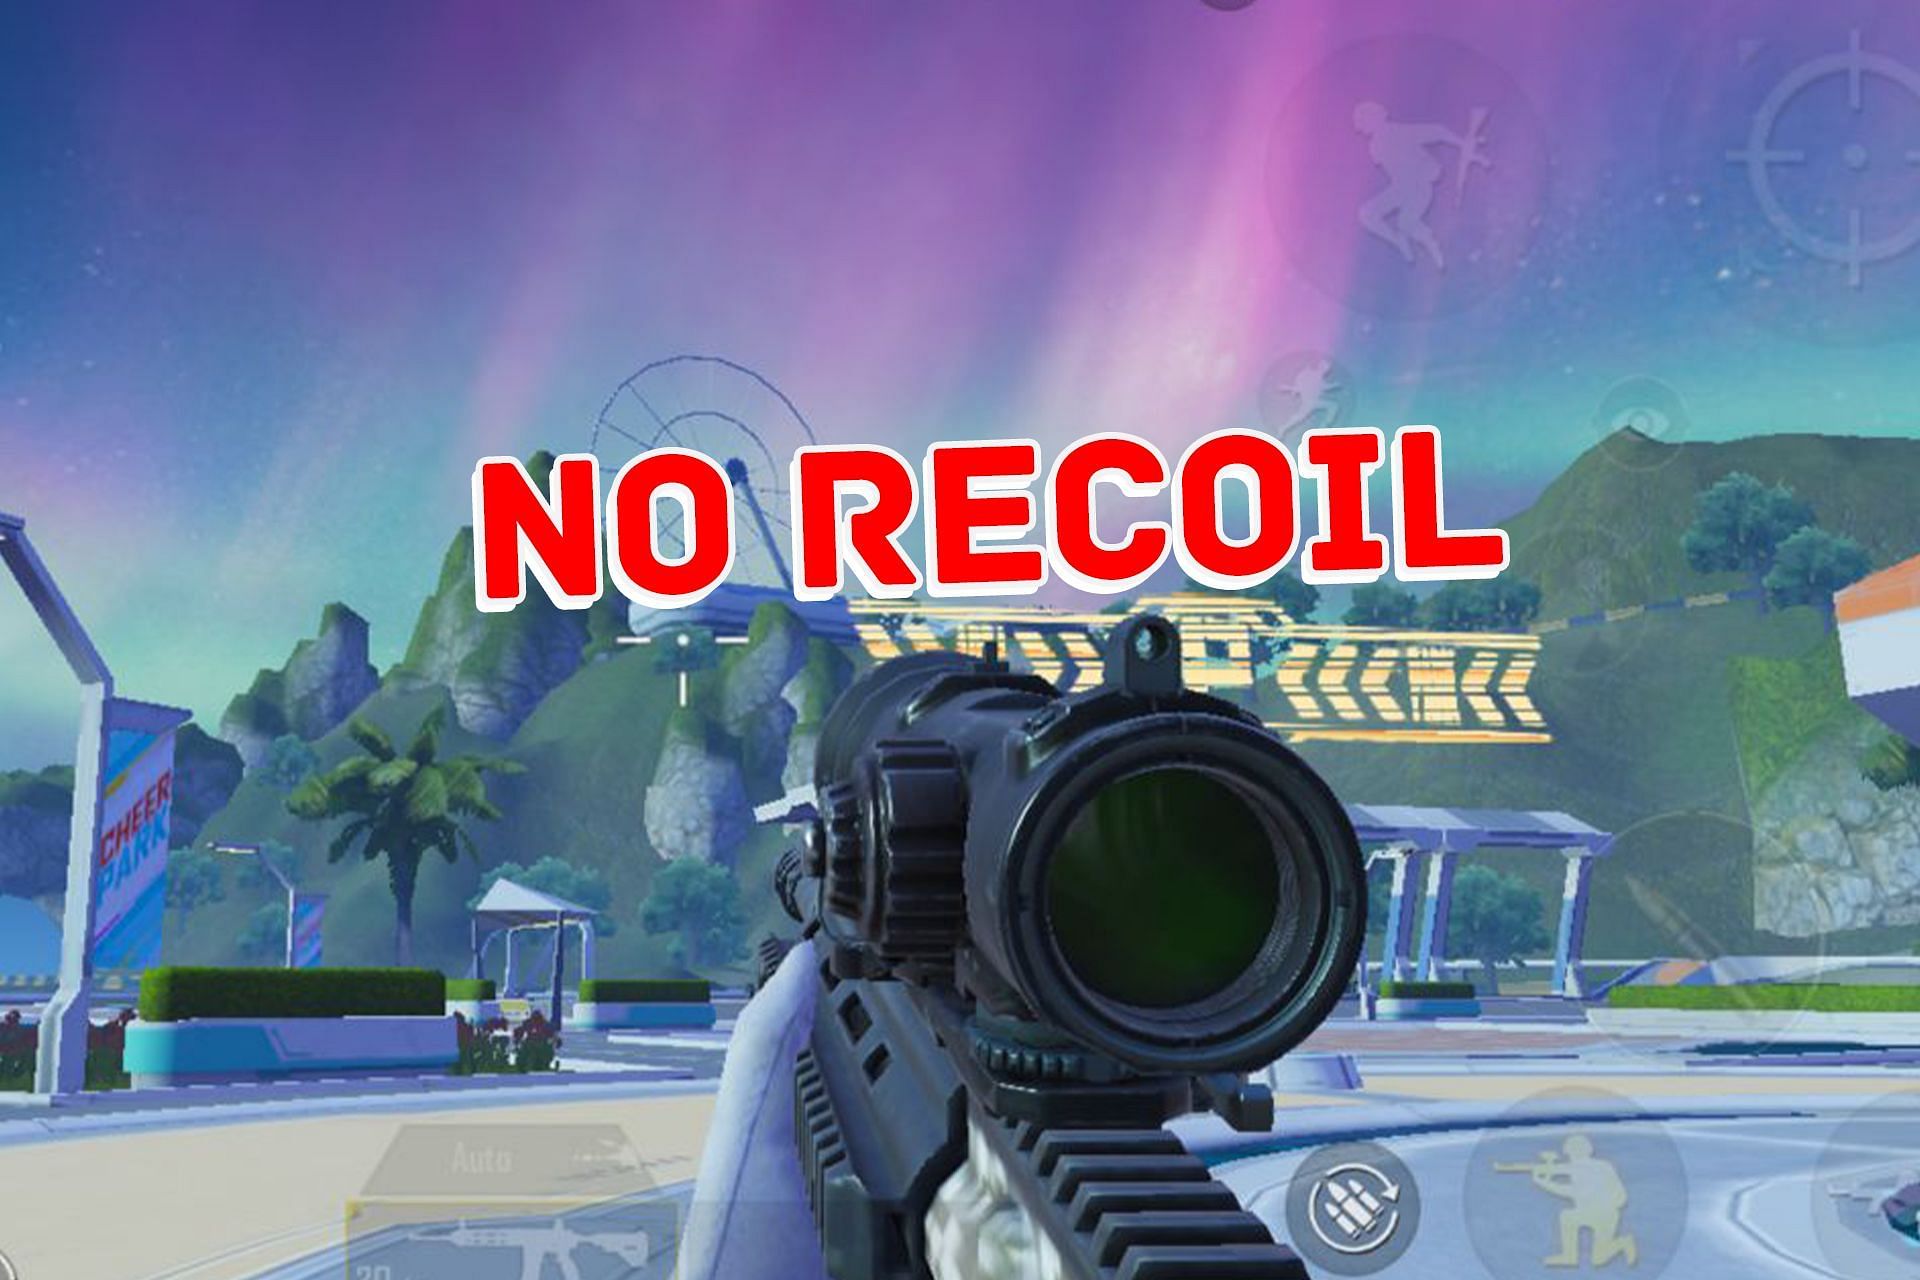 BGMI no recoil file: Real or fake?